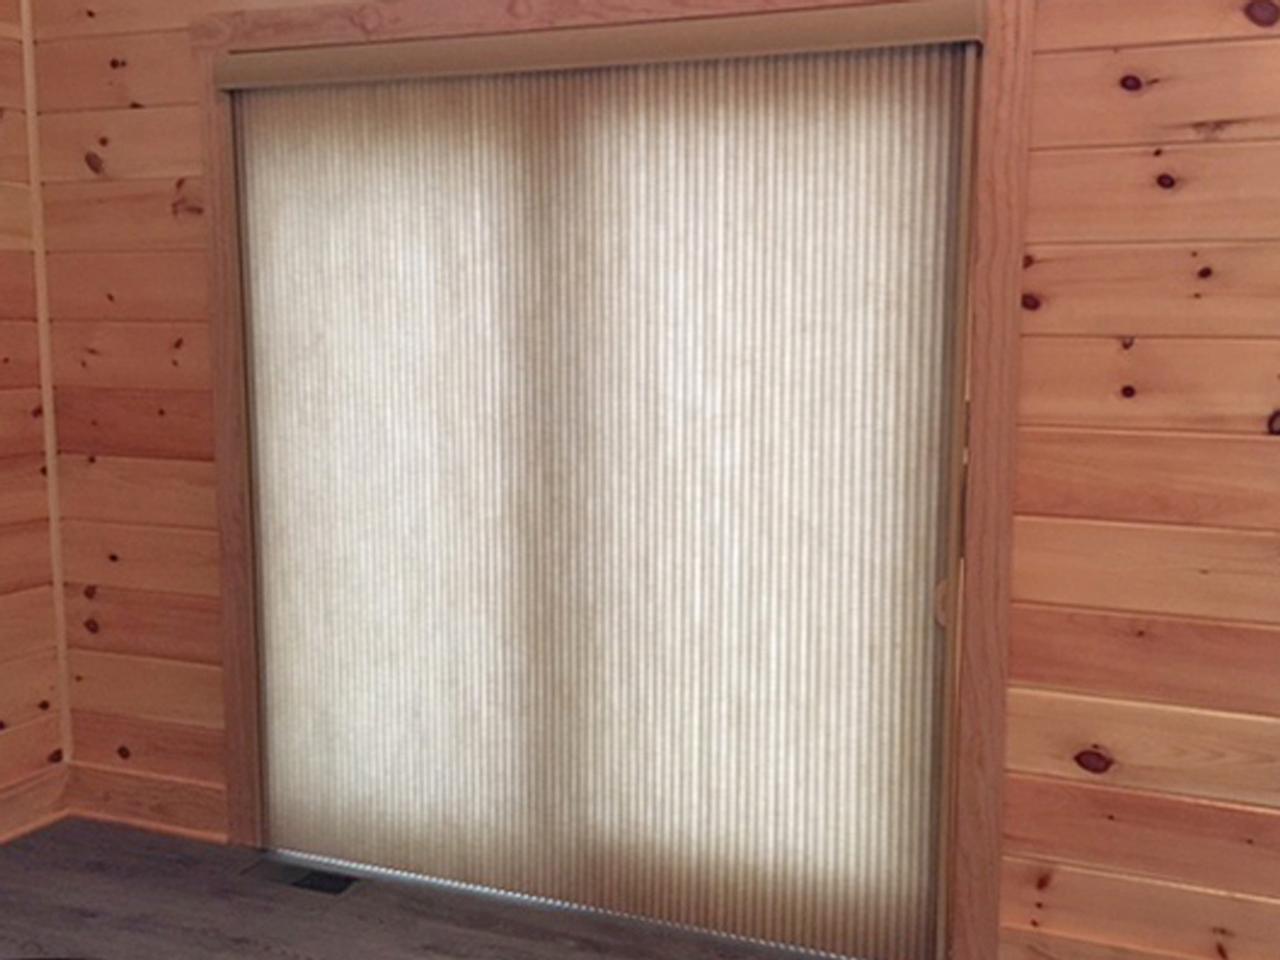 Woven wood vertical shades on sliding glass door